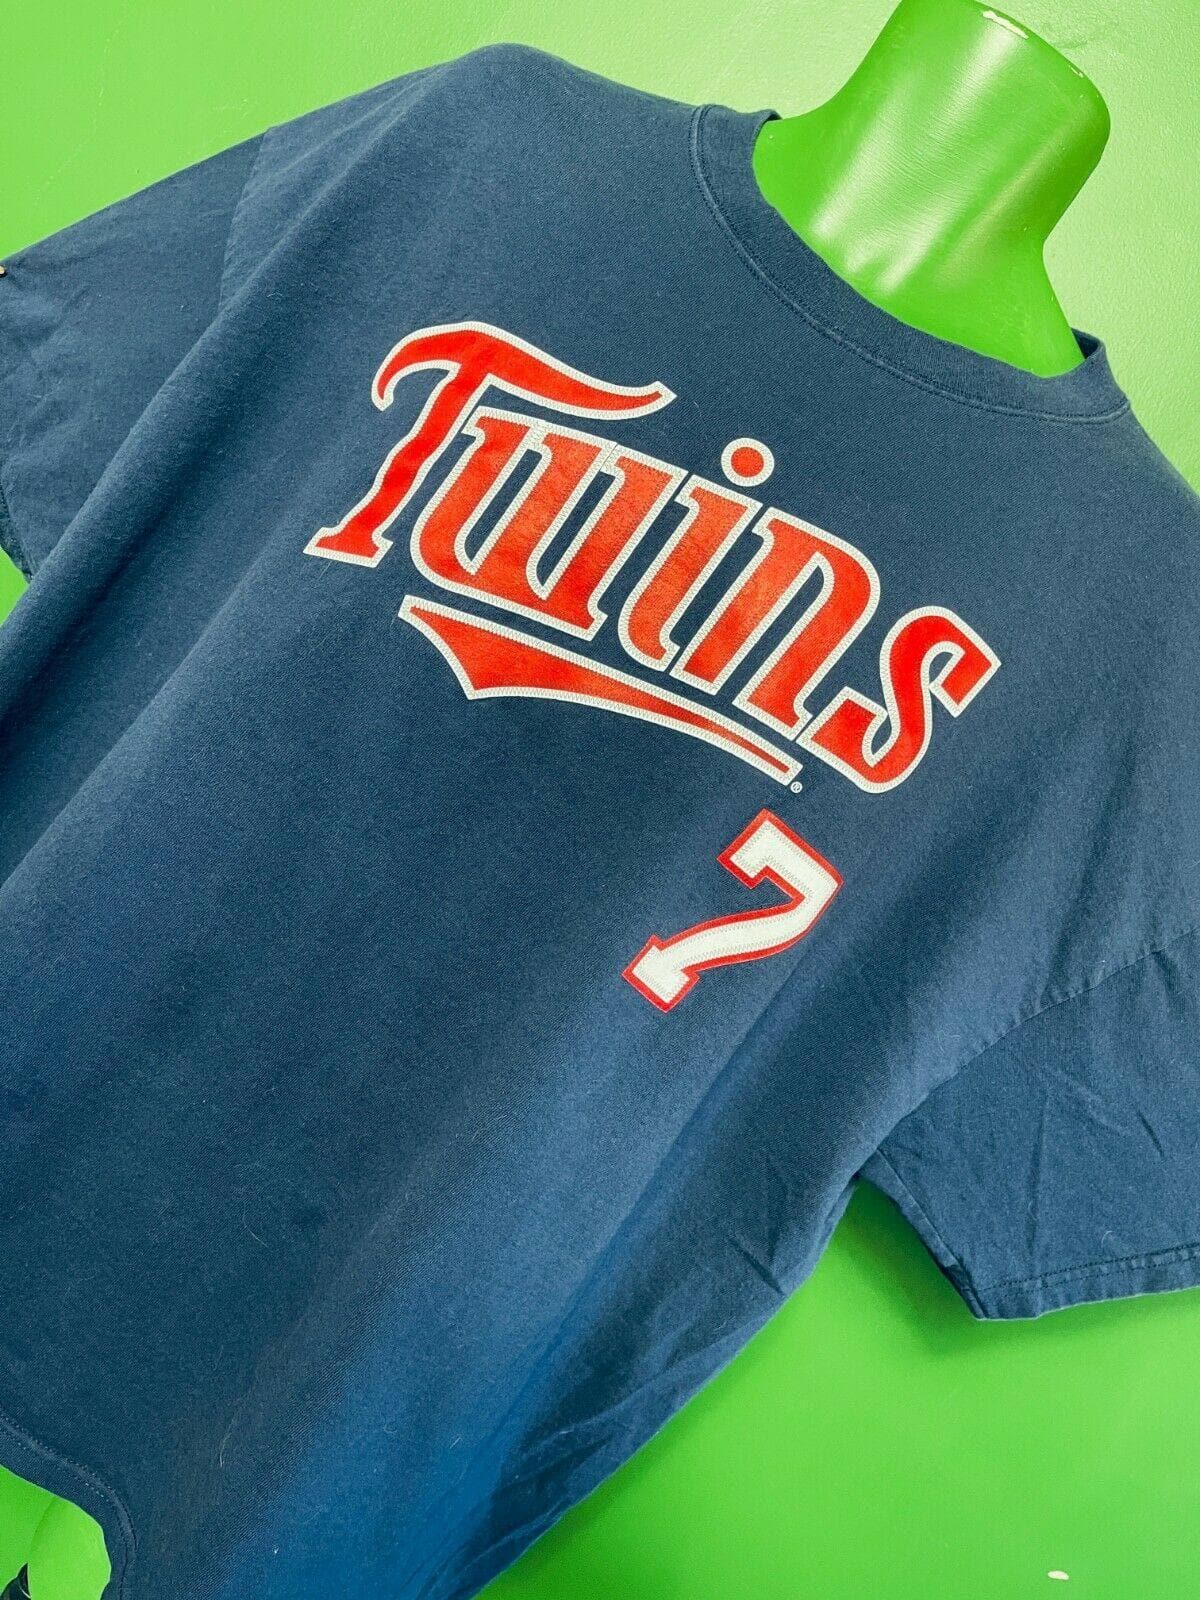 MLB Minnesota Twins Joe Mauer #7 Lee T-Shirt Men's 2X-Large